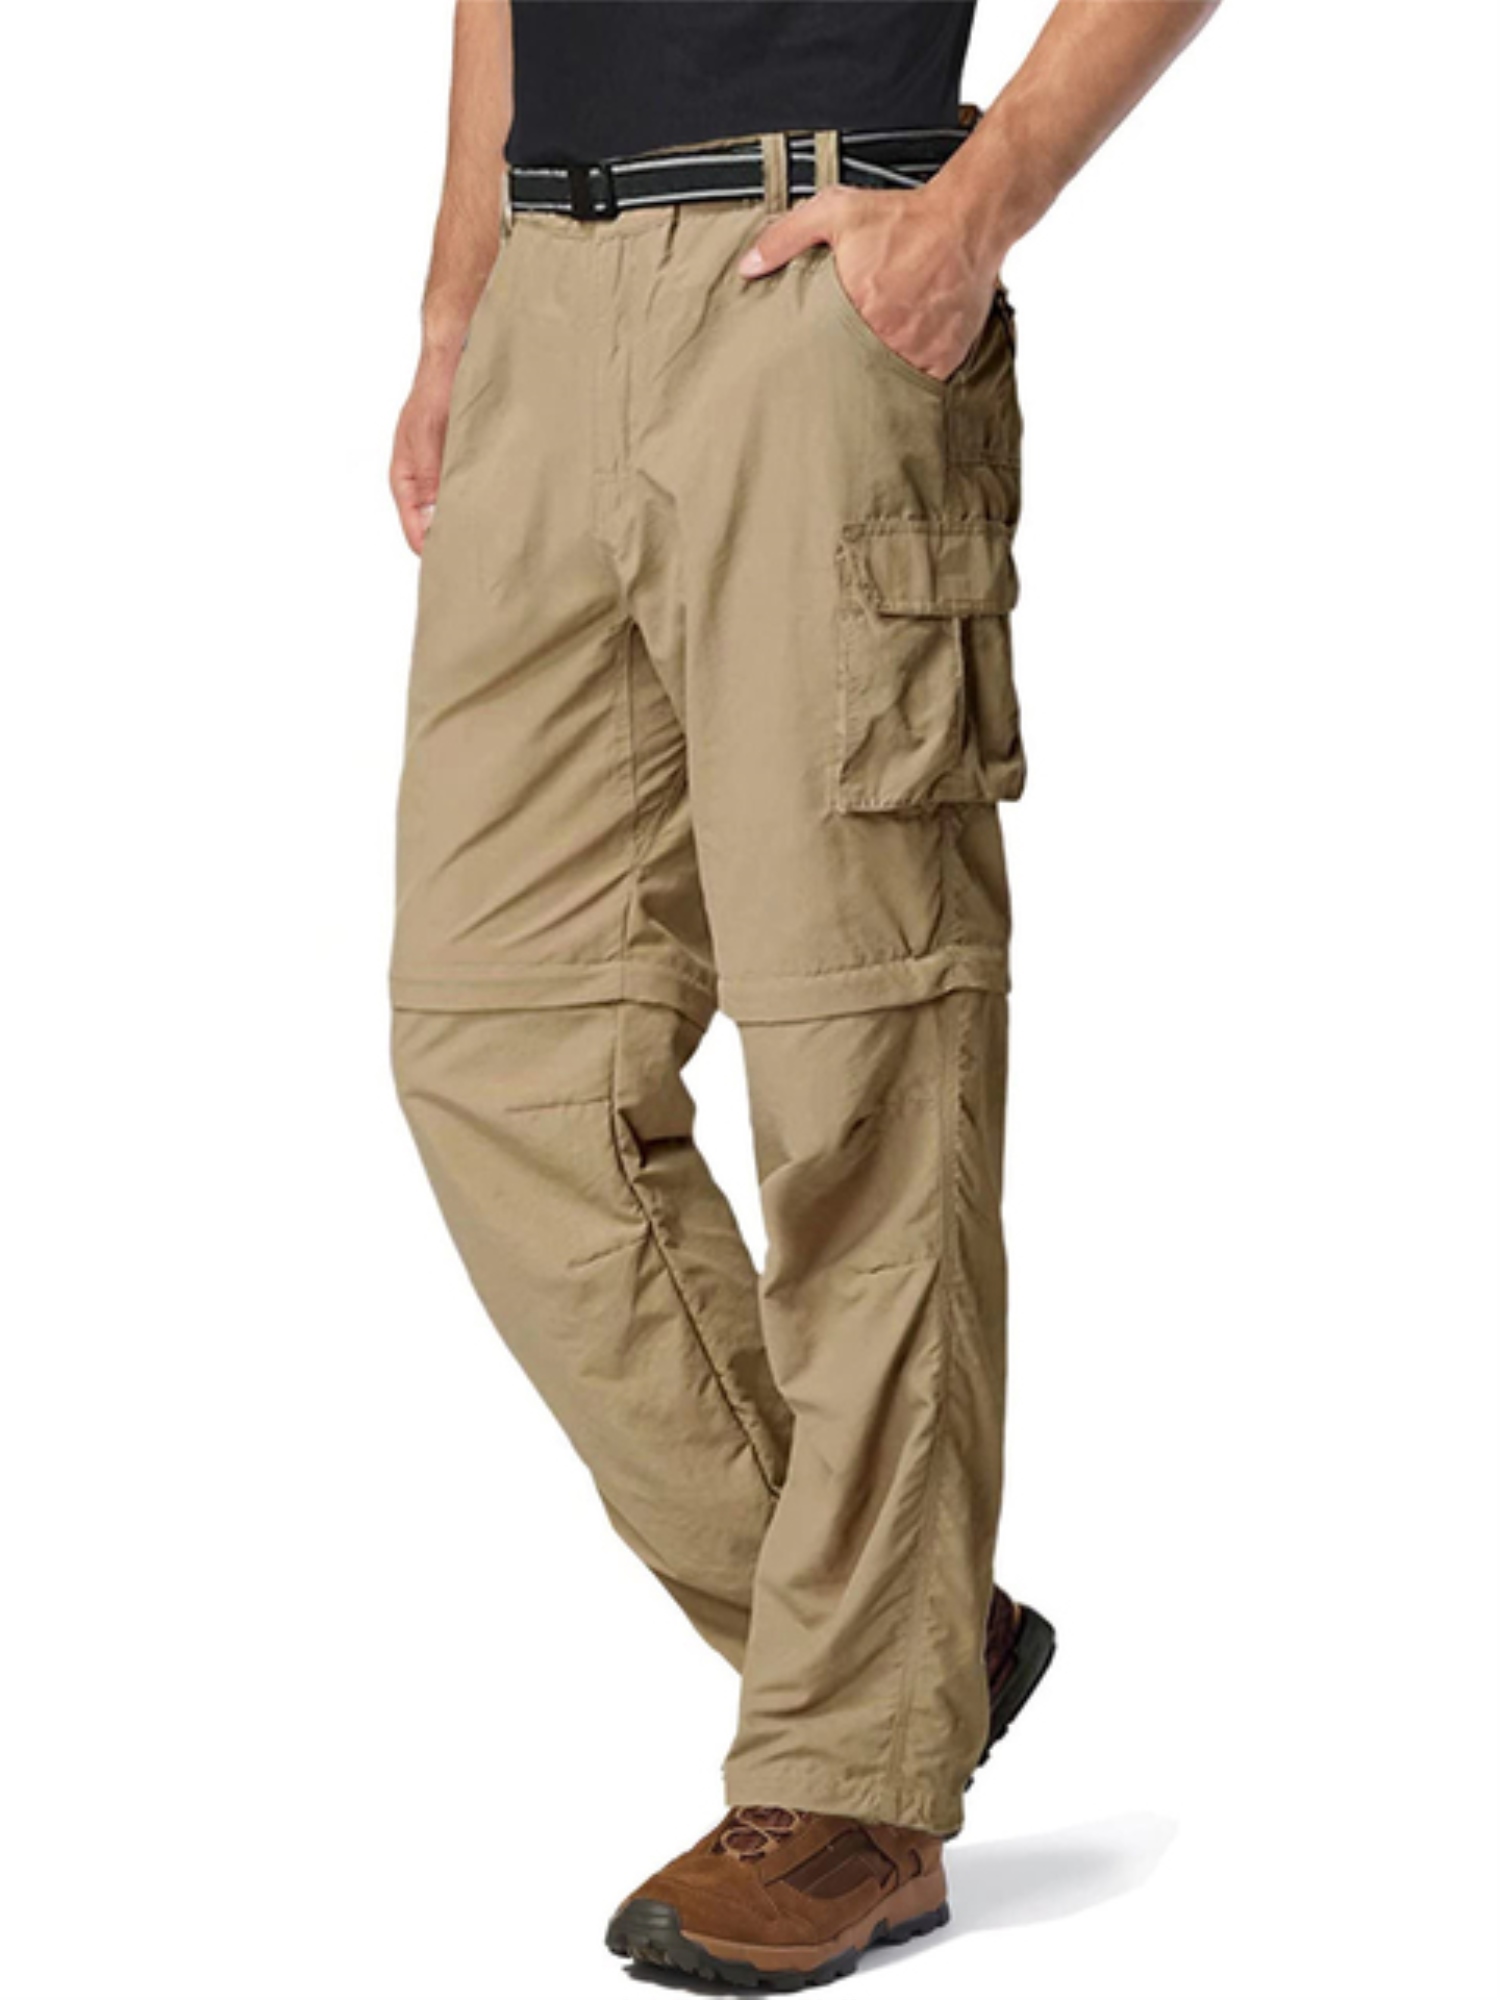 TACVASEN Zip Off Hiking Pants Convertible Shorts Mens Cargo Work